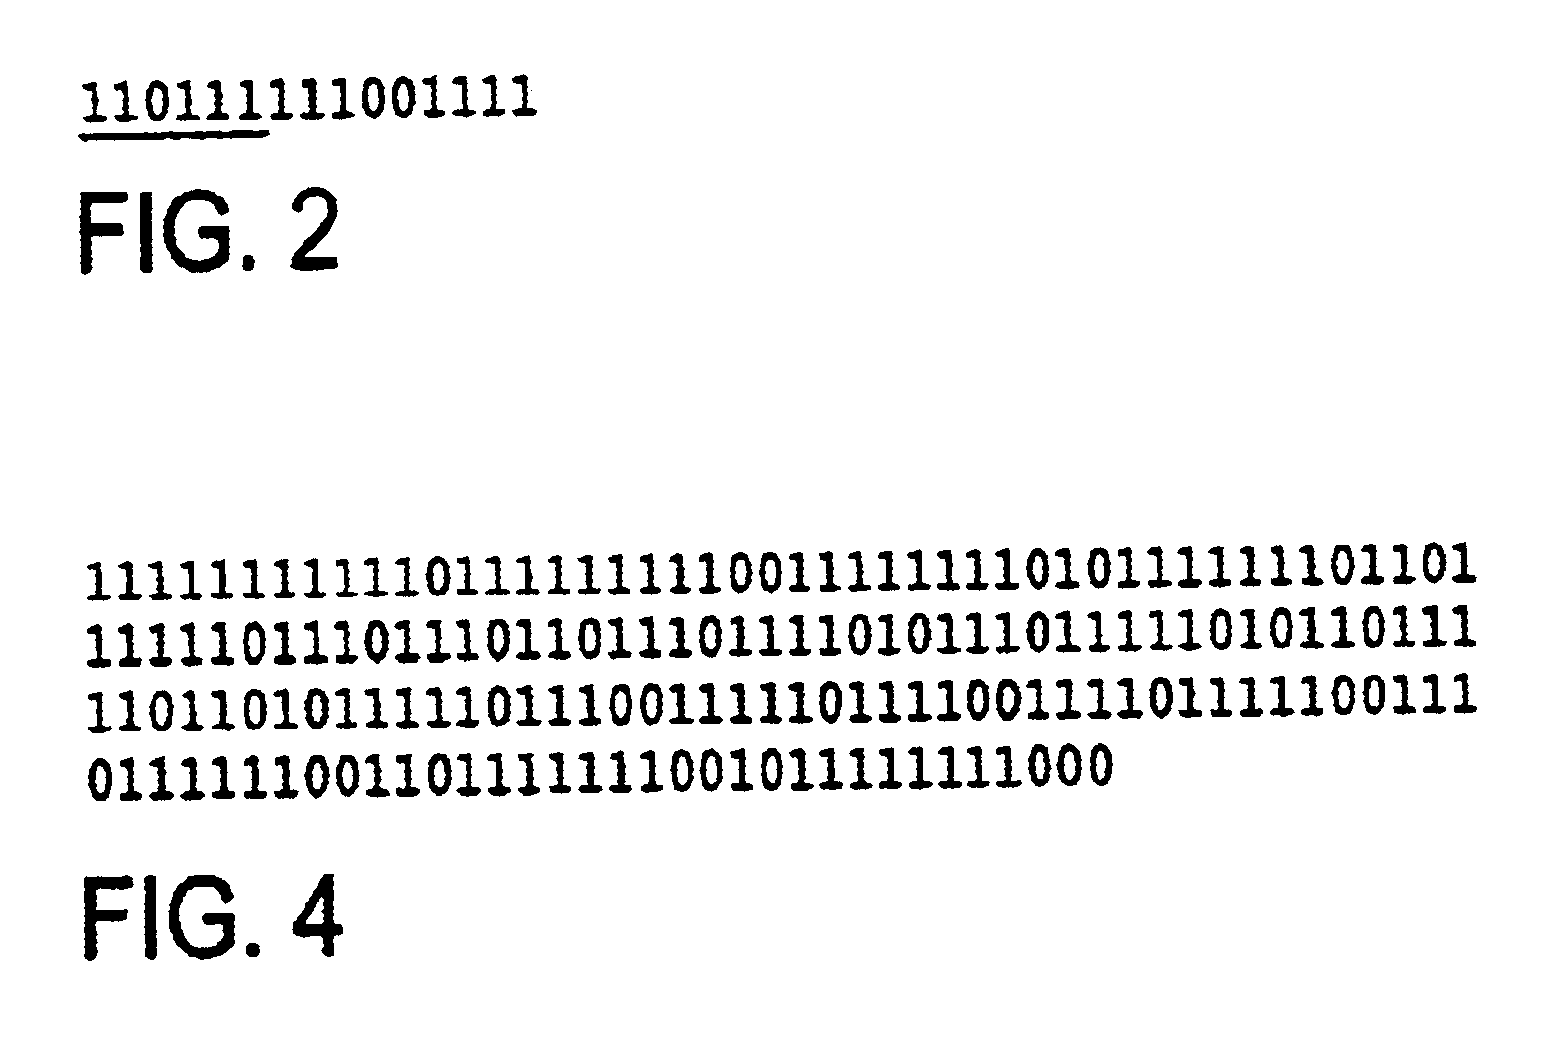 Position encoder using statistically biased pseudorandom sequence